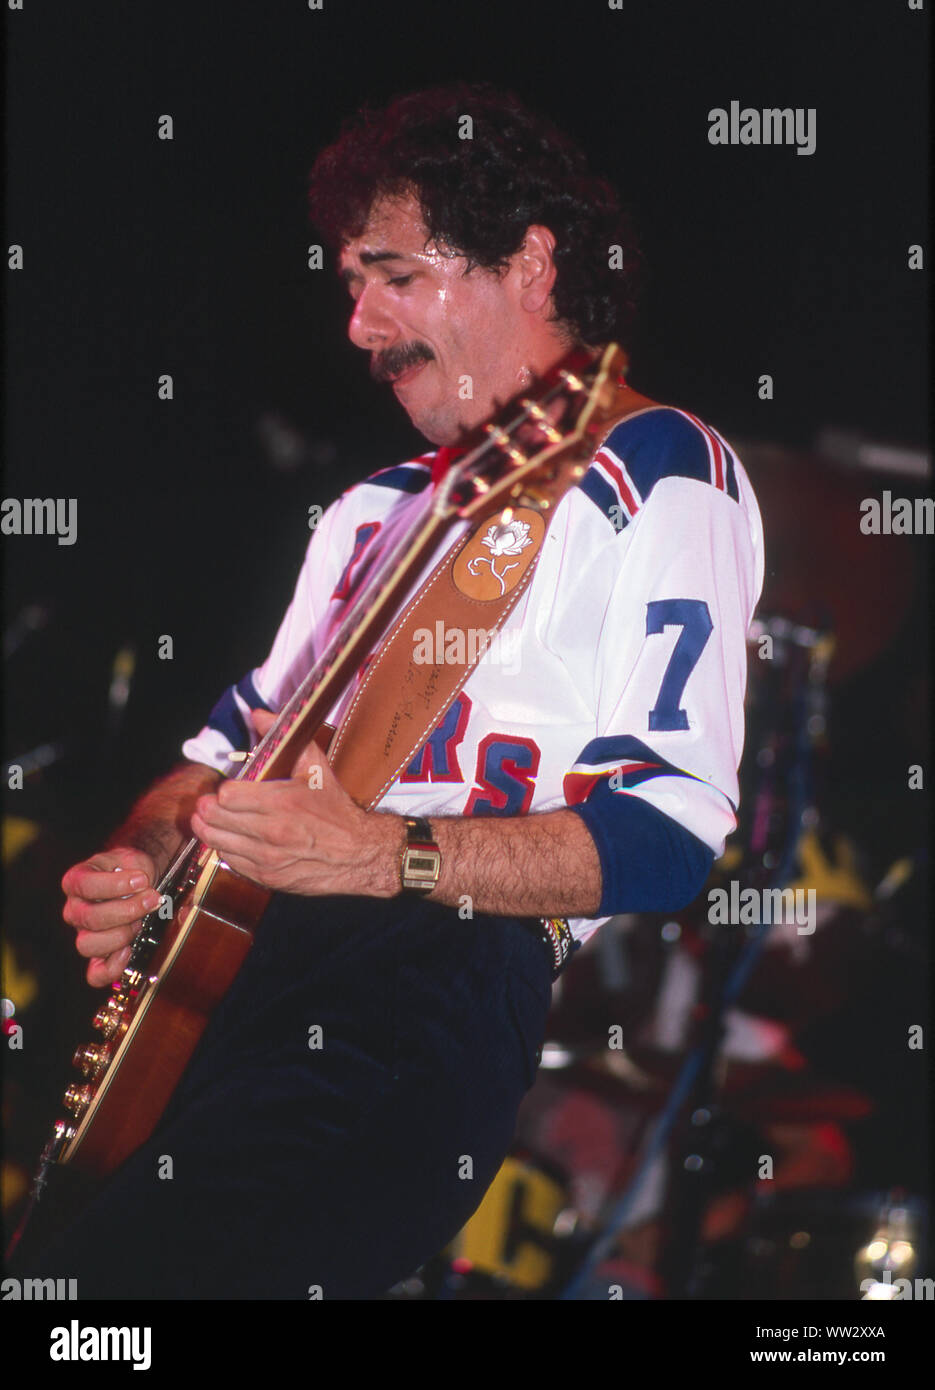 Carlos Santana plays guitar onstage at the Palladium in New York in November 1979. Stock Photo